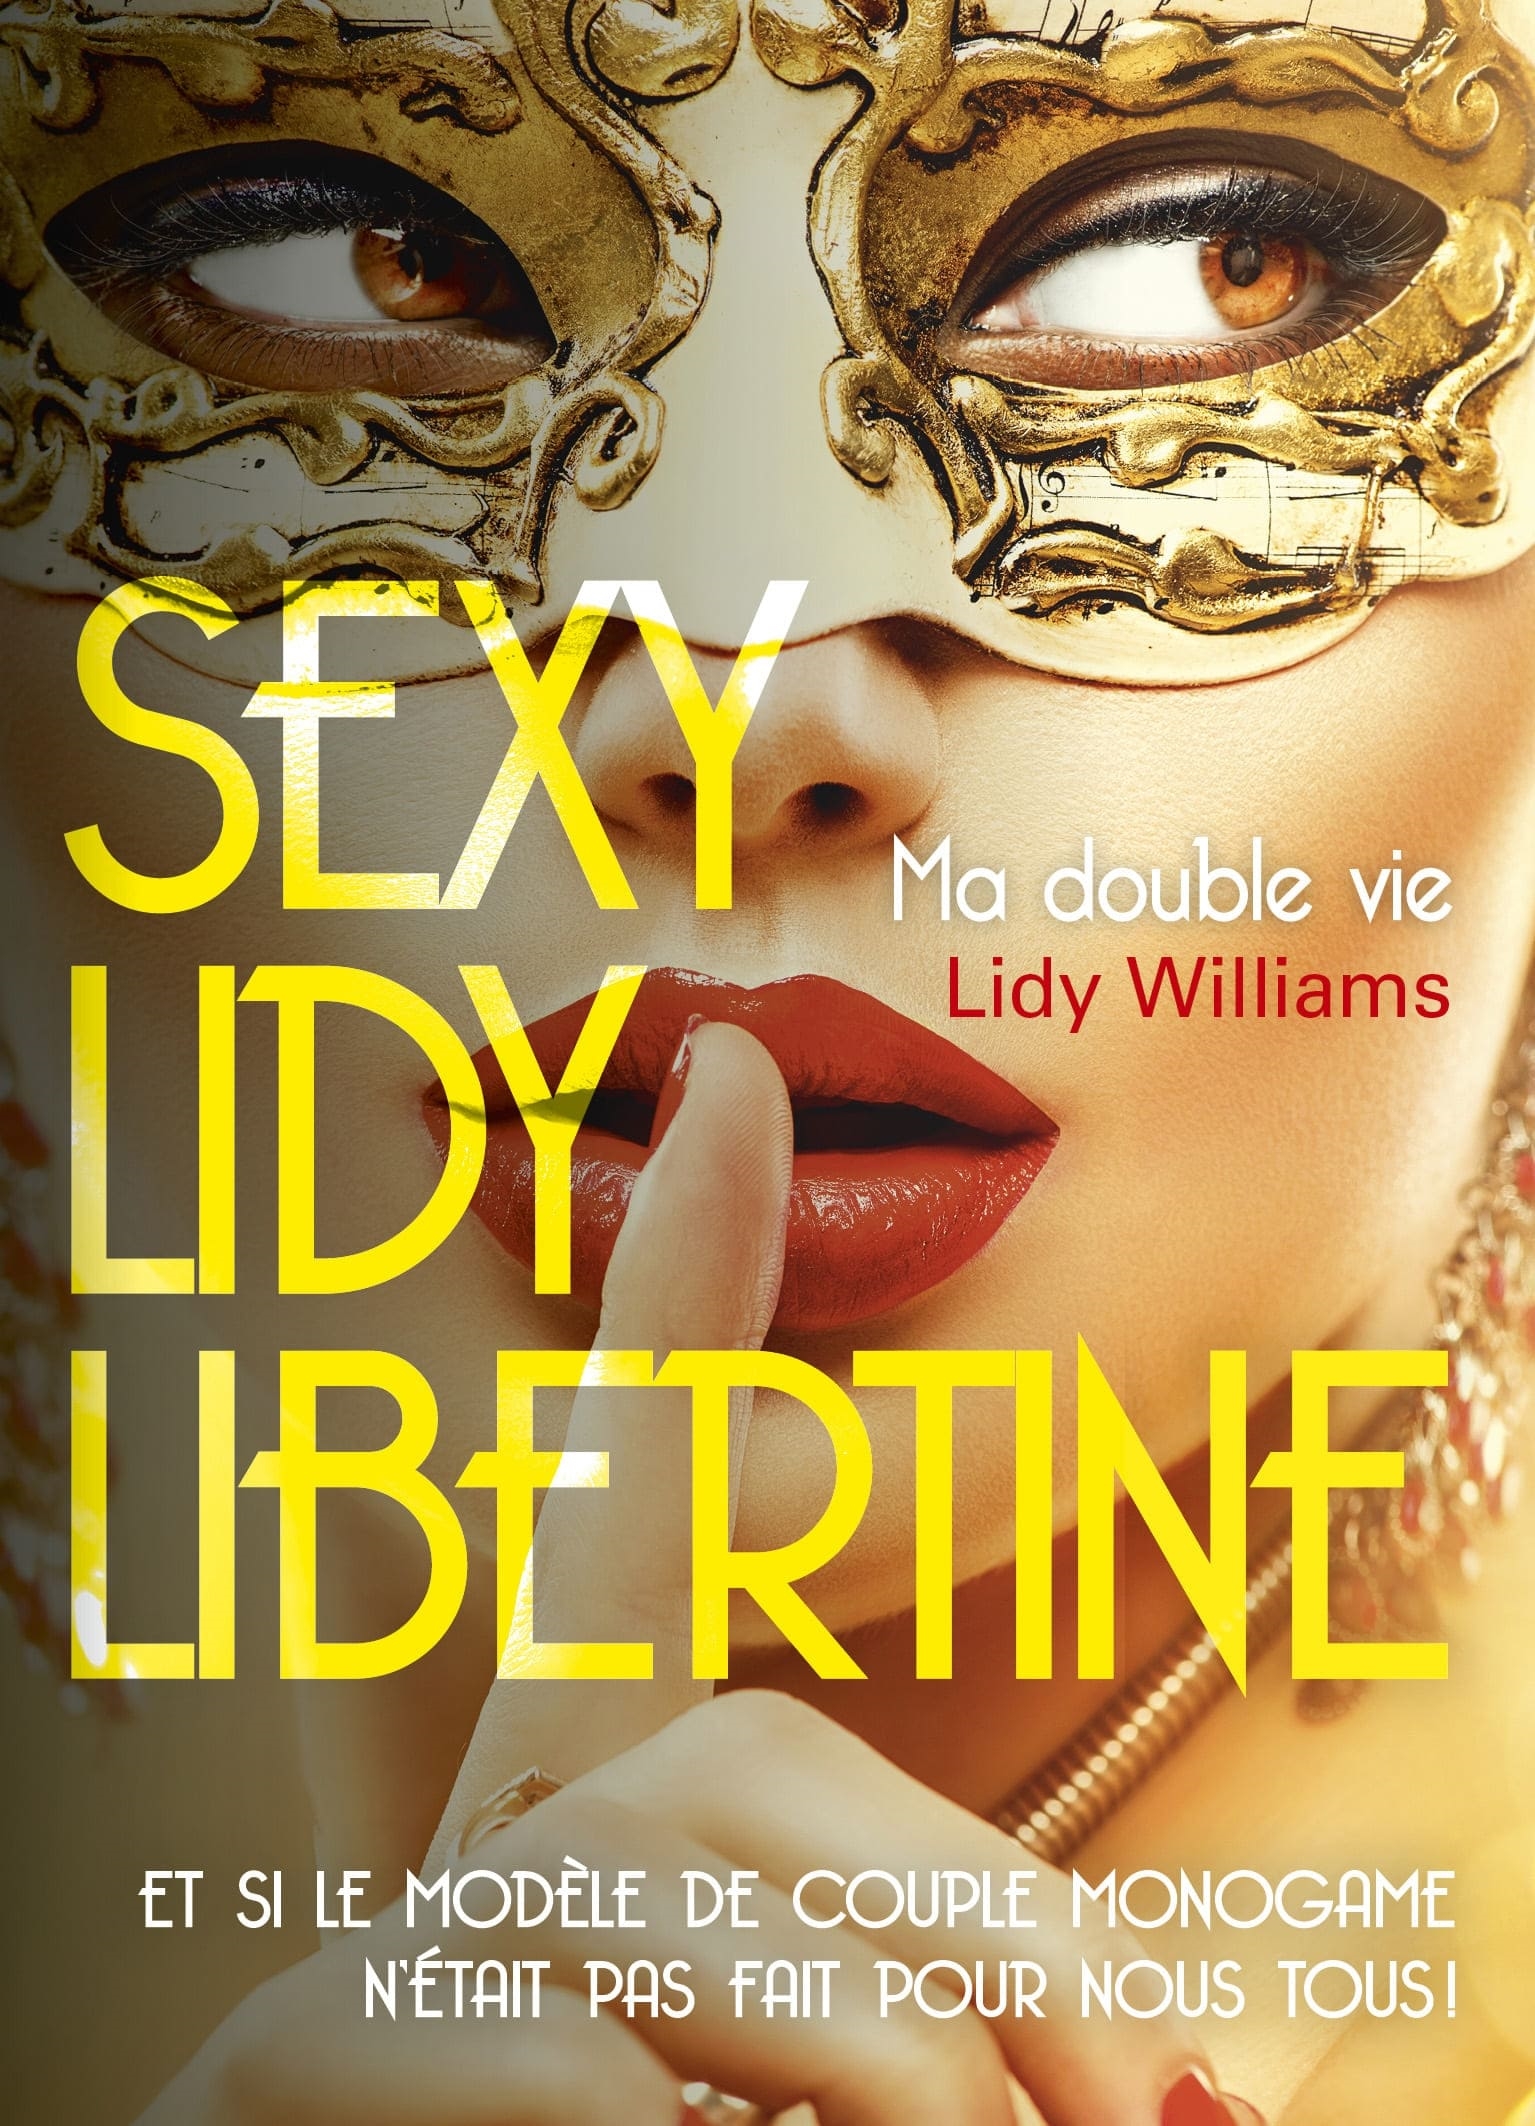 Lidy Libertine nouveau livre